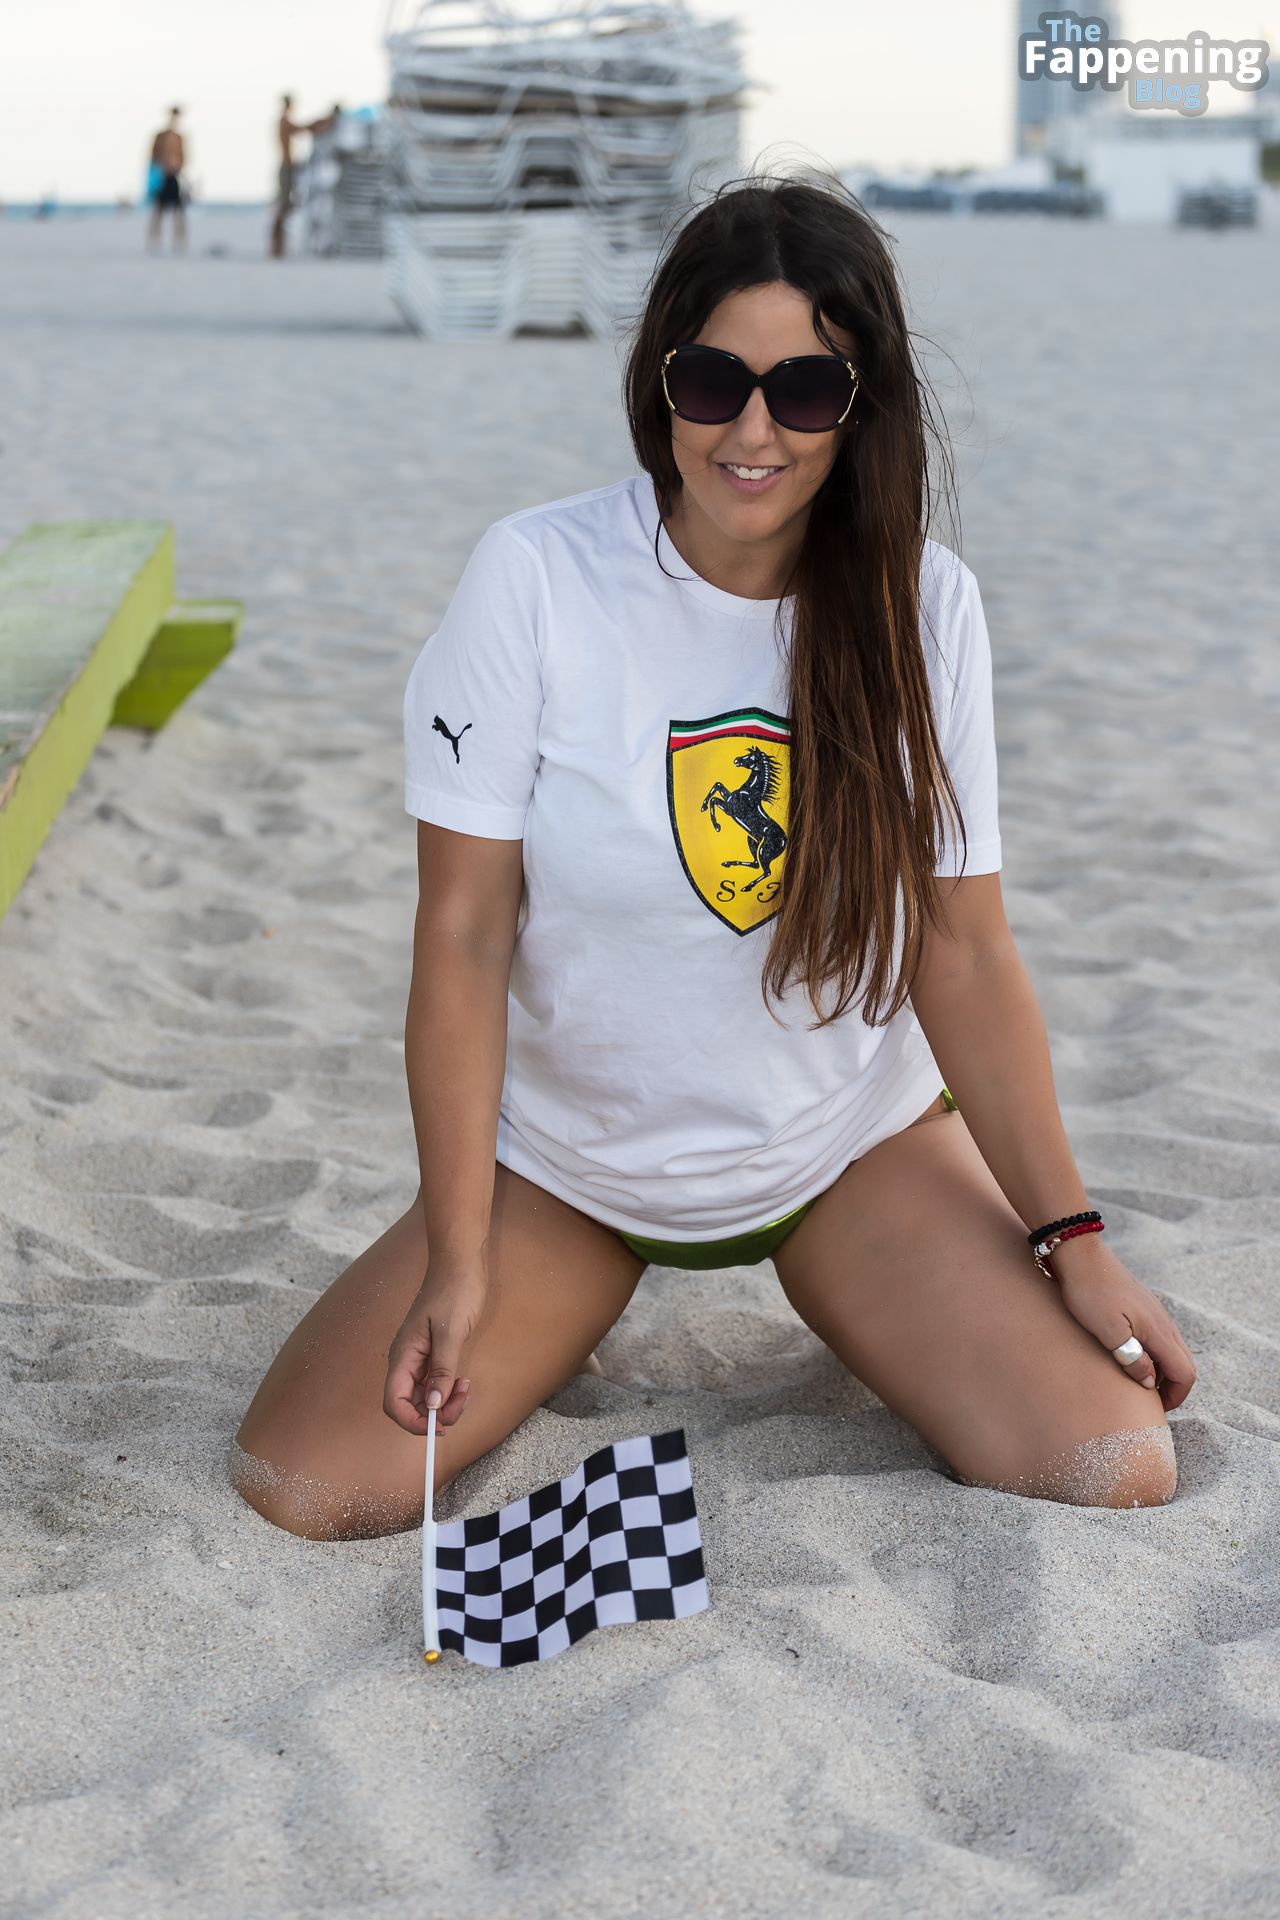 Claudia Romani Roots For Ferrari on the Beach in Miami (12 Photos)